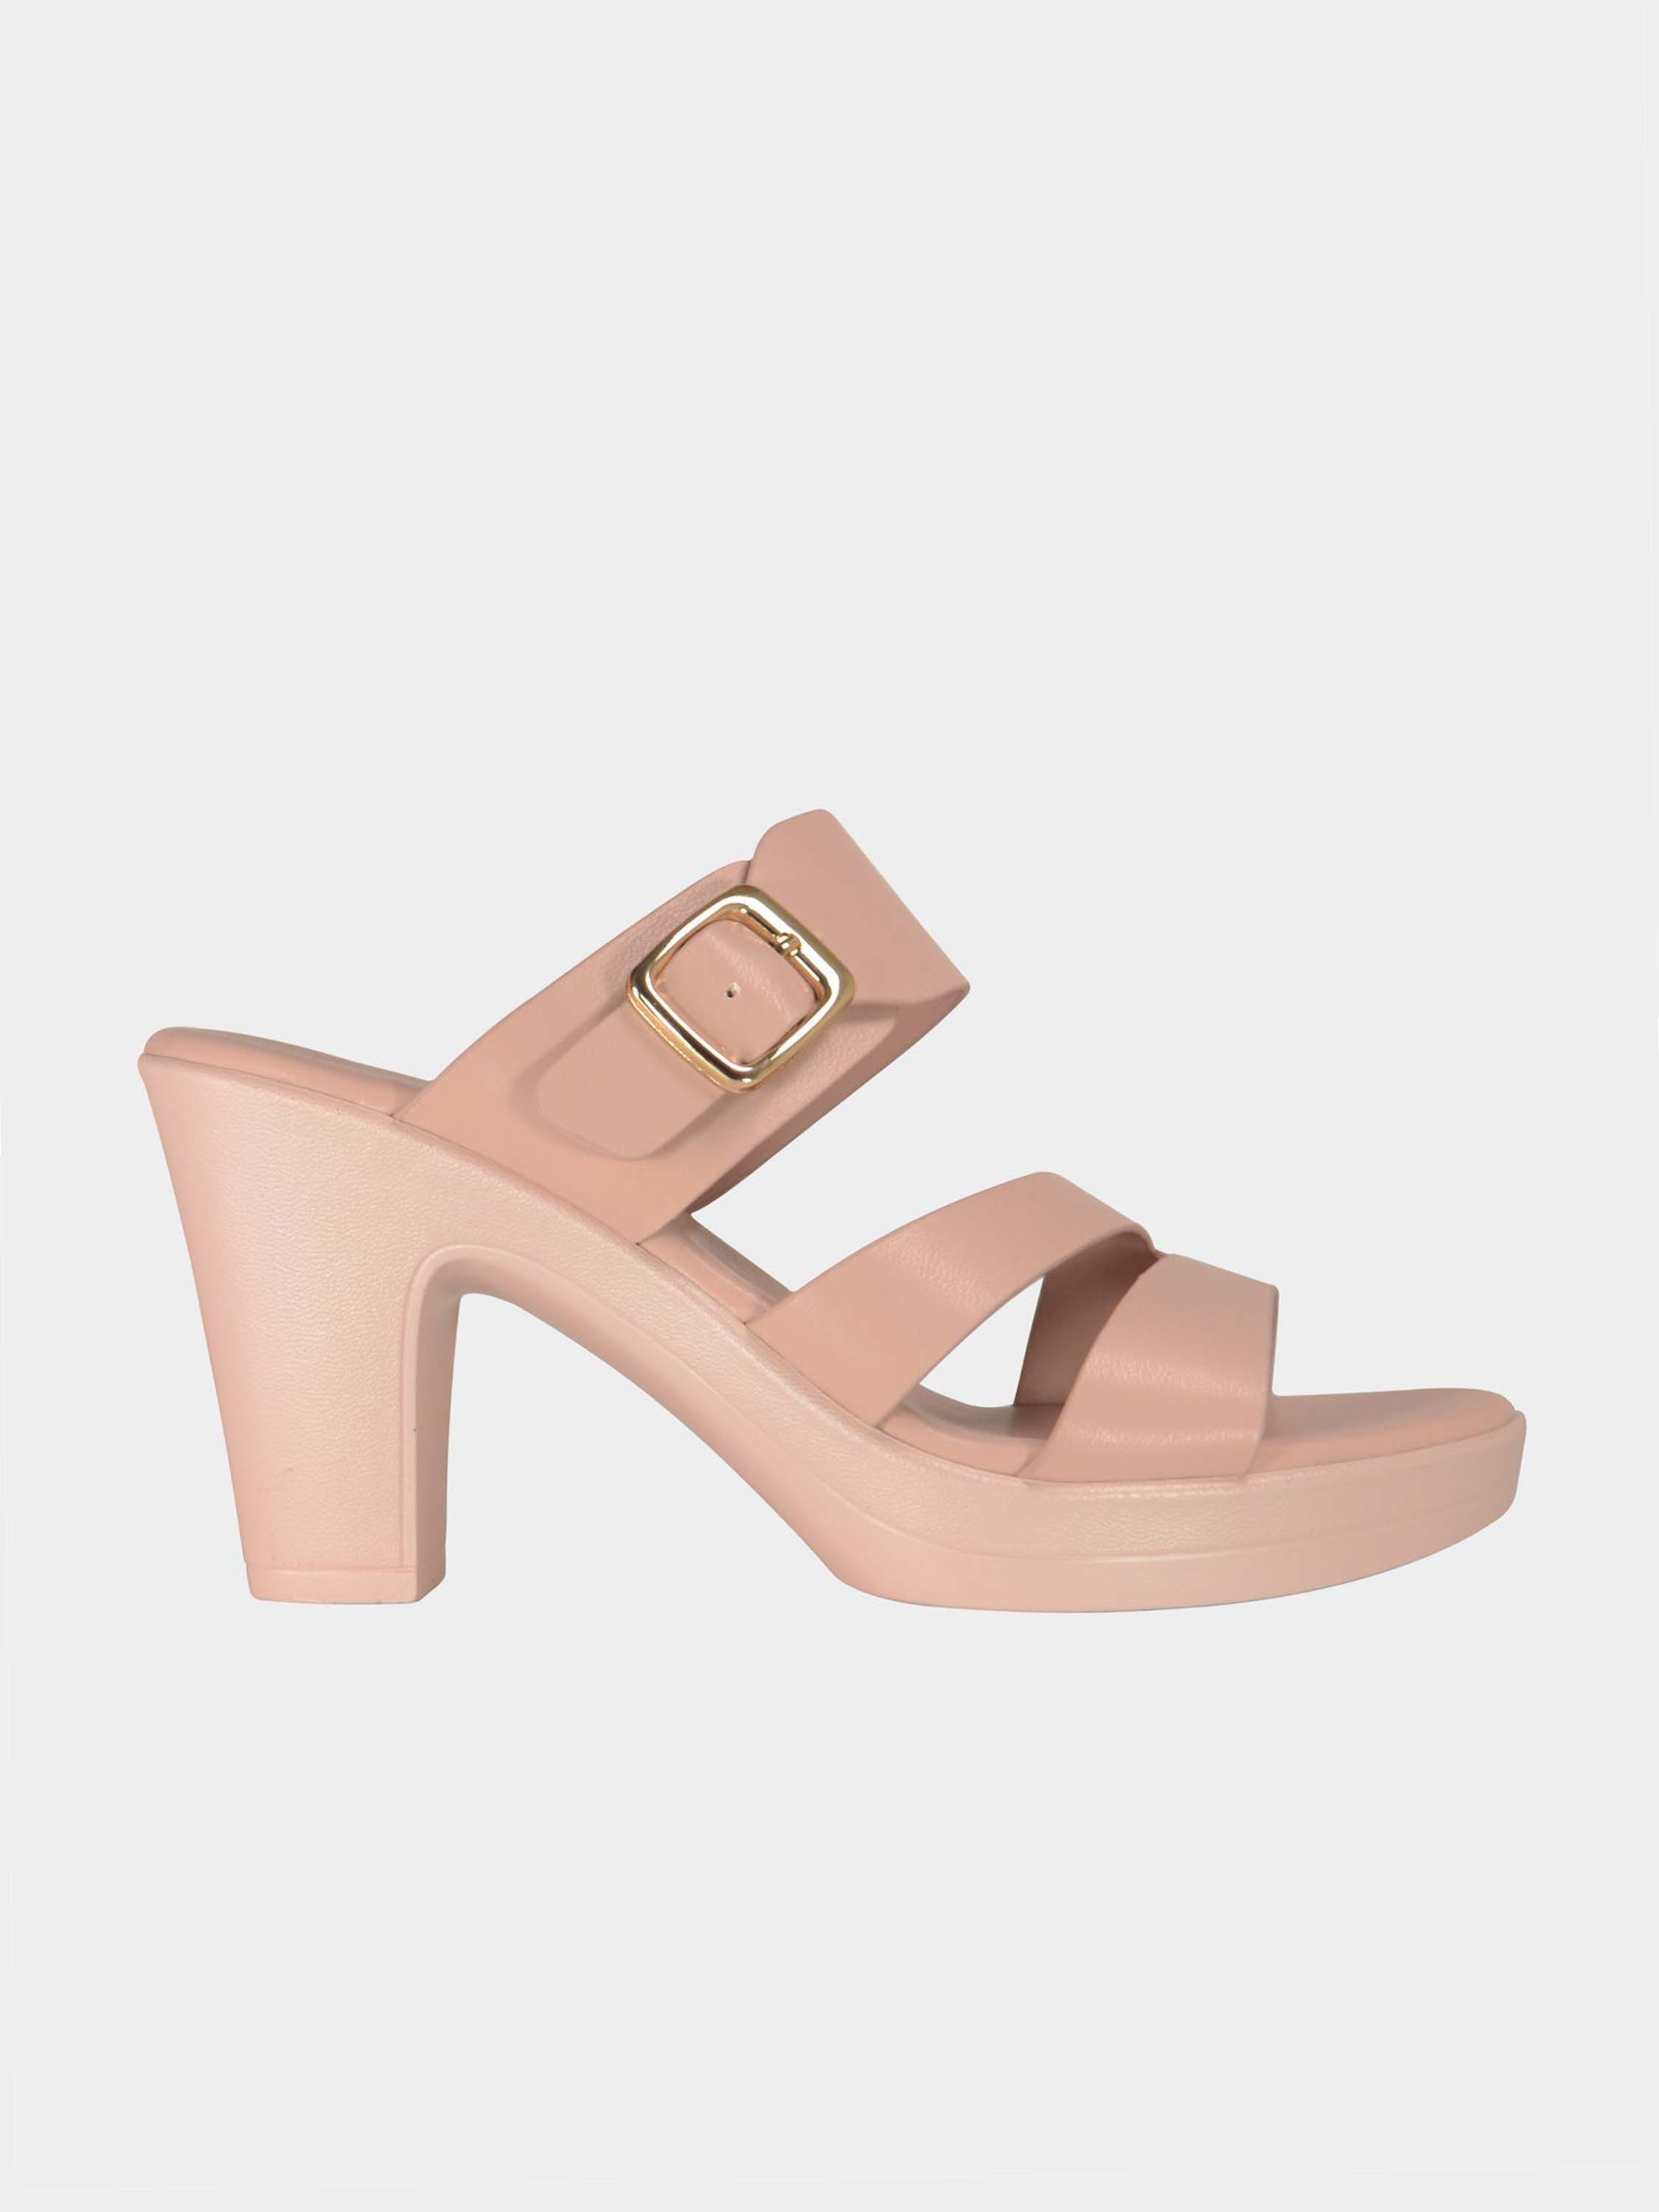 Michelle Morgan 913RJ163 Women's Heeled Sandals #color_Pink